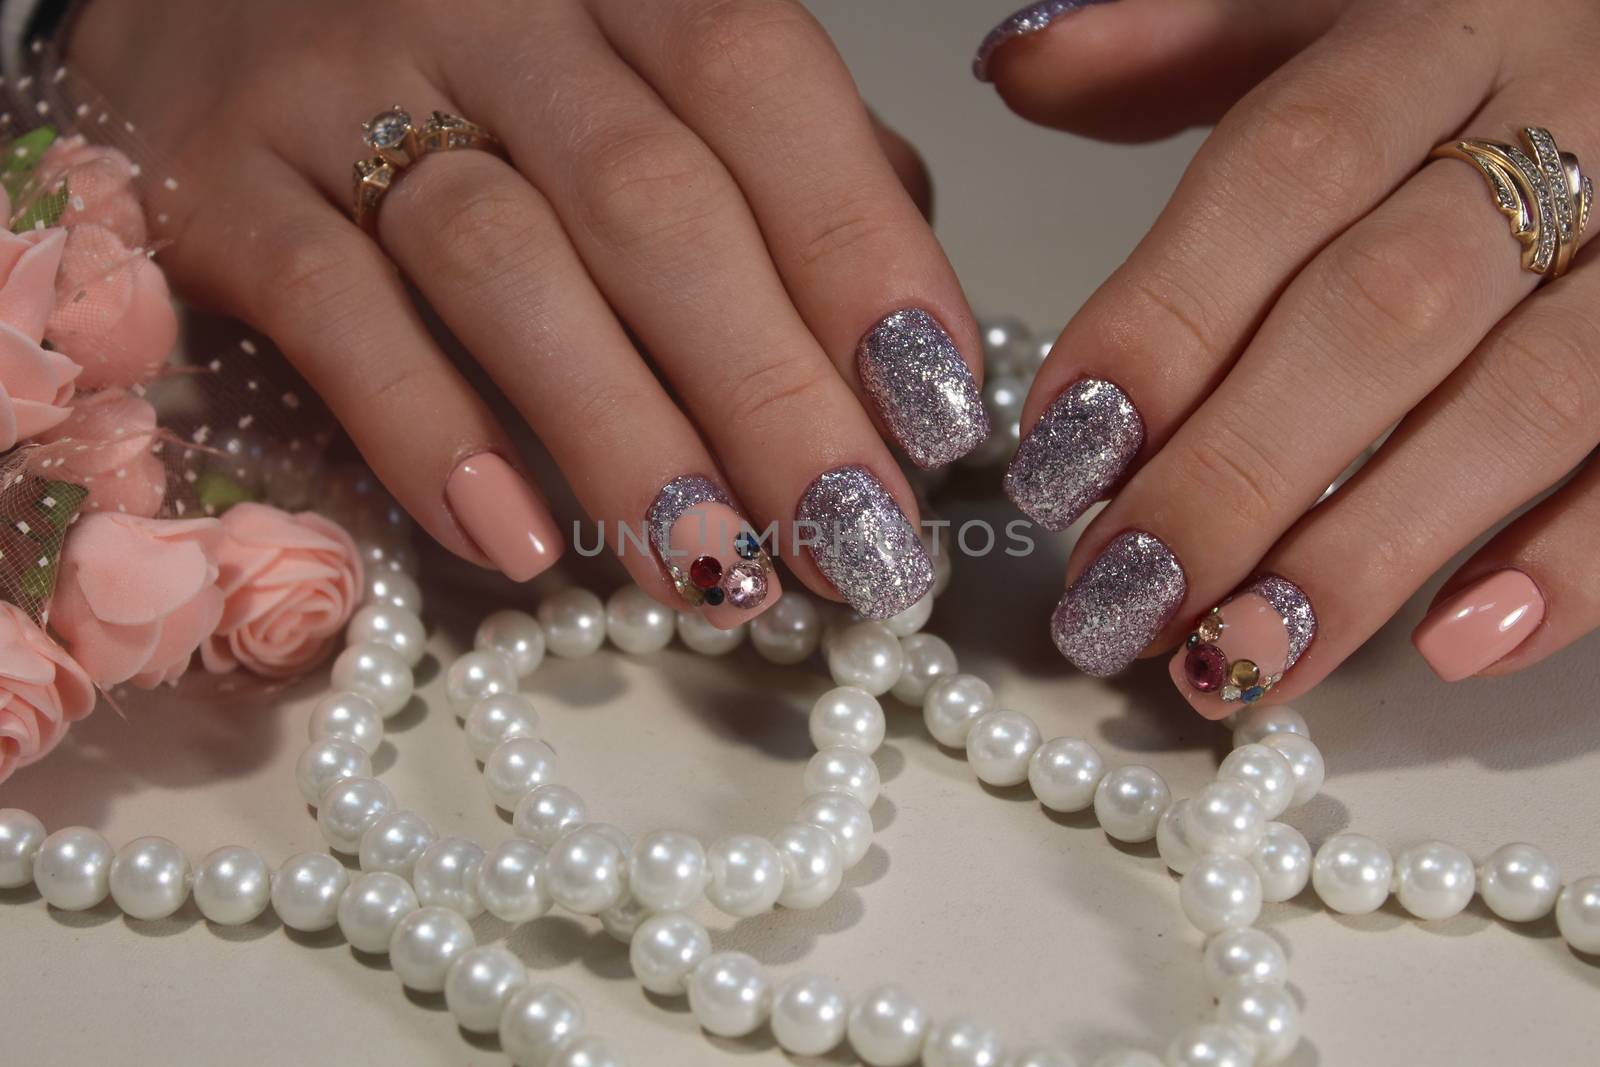 Brilliant manicure design with beautiful stones